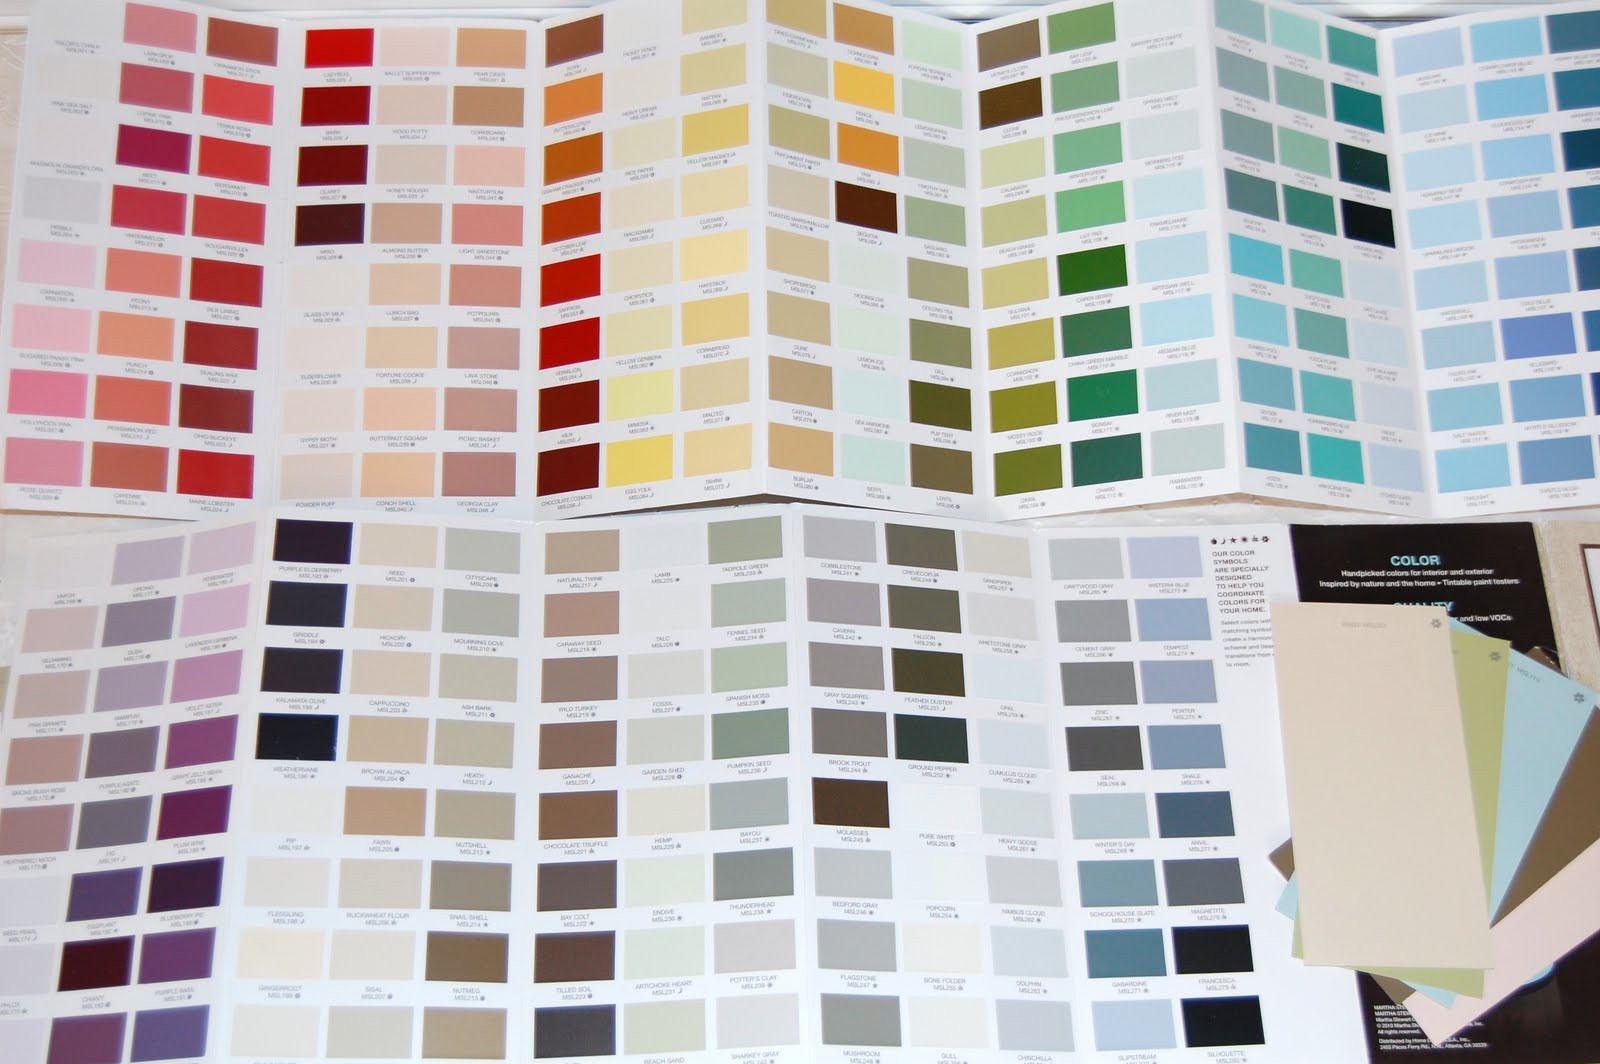 Best ideas about Paint Colors Home Depot
. Save or Pin Home Depot Paint Color Chart Now.